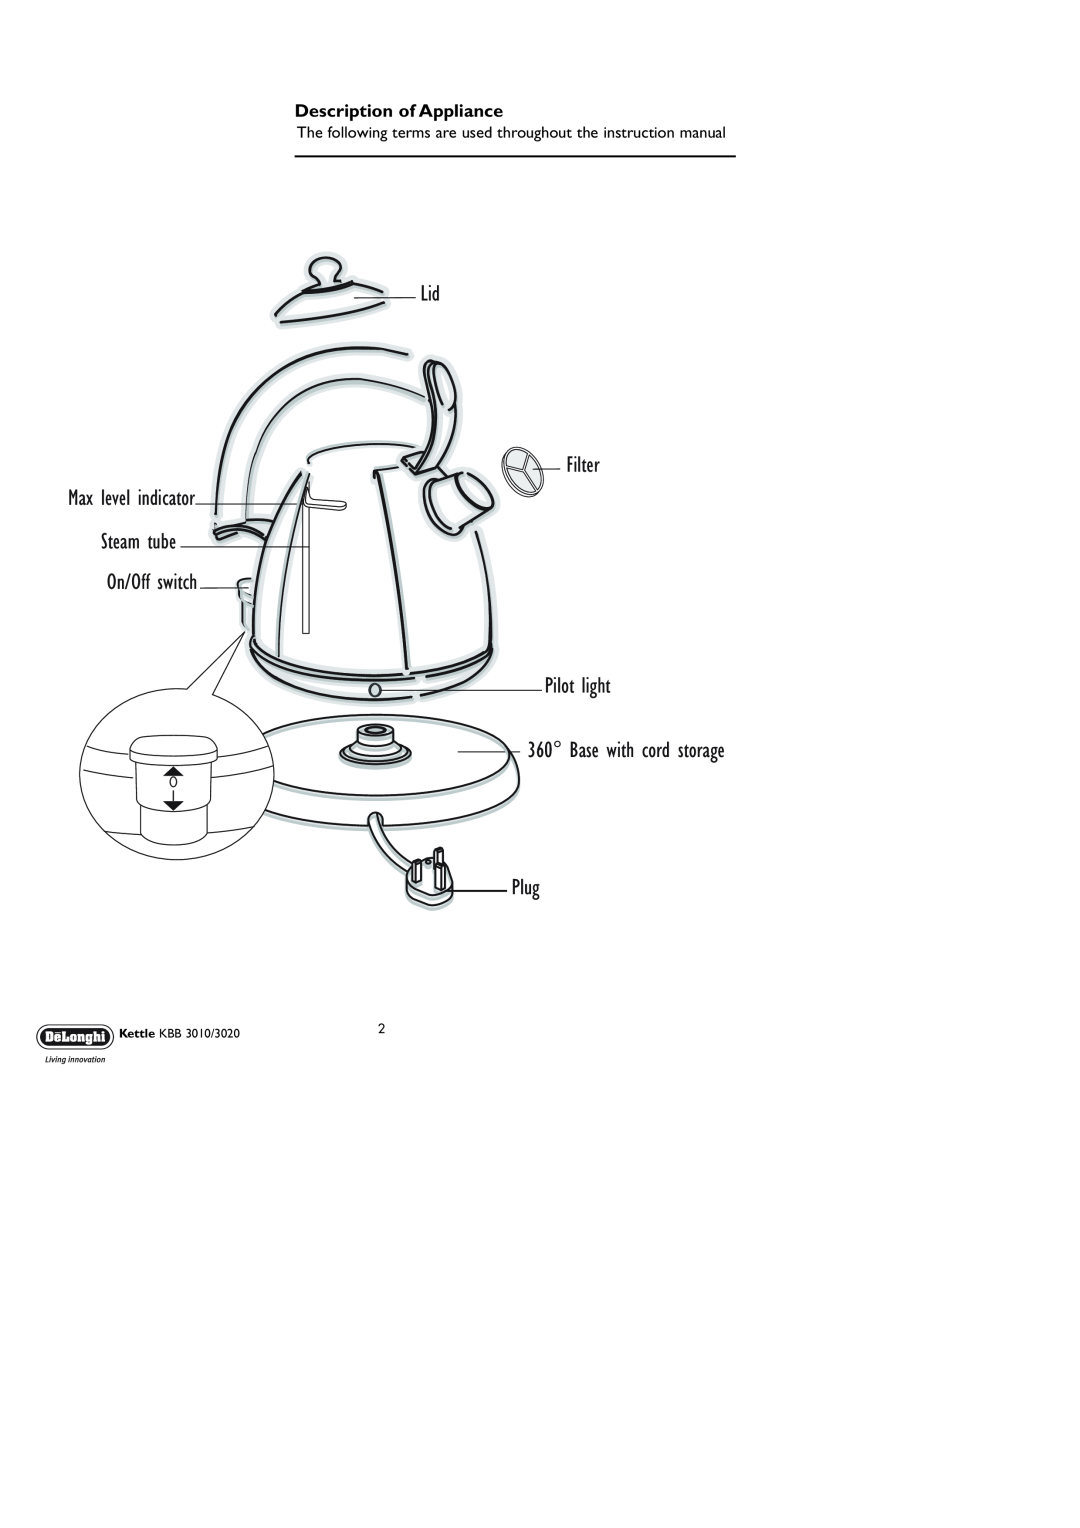 DeLonghi KBB 3010 Description of Appliance, Lid Filter Max level indicator Steam tube, On/Off switch Pilot light, Plug 